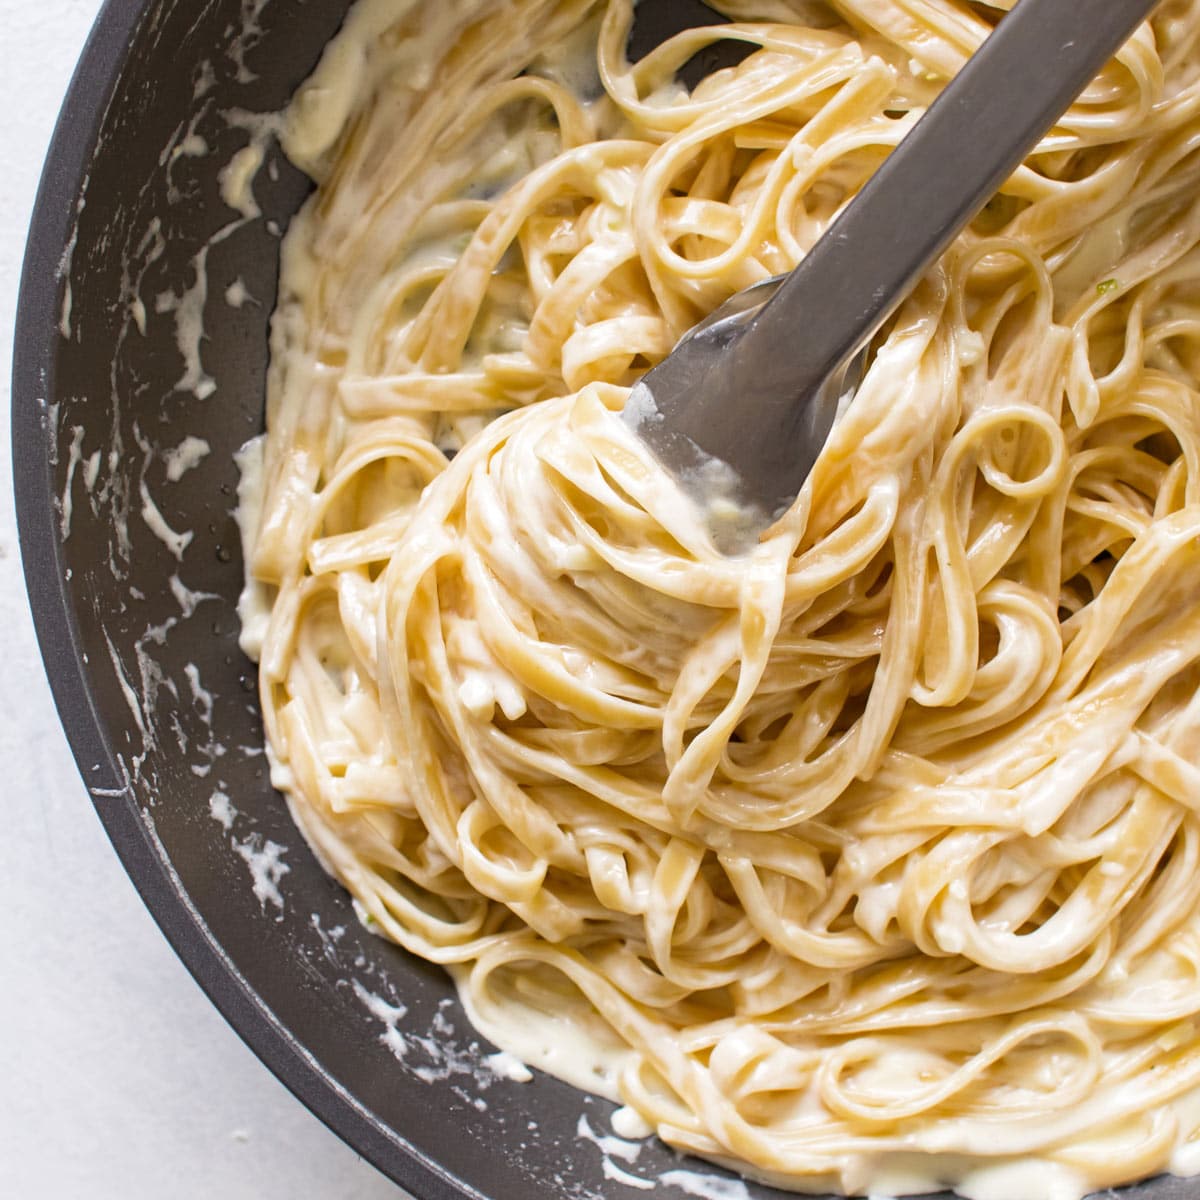 garlic pasta in a pan with tongs.